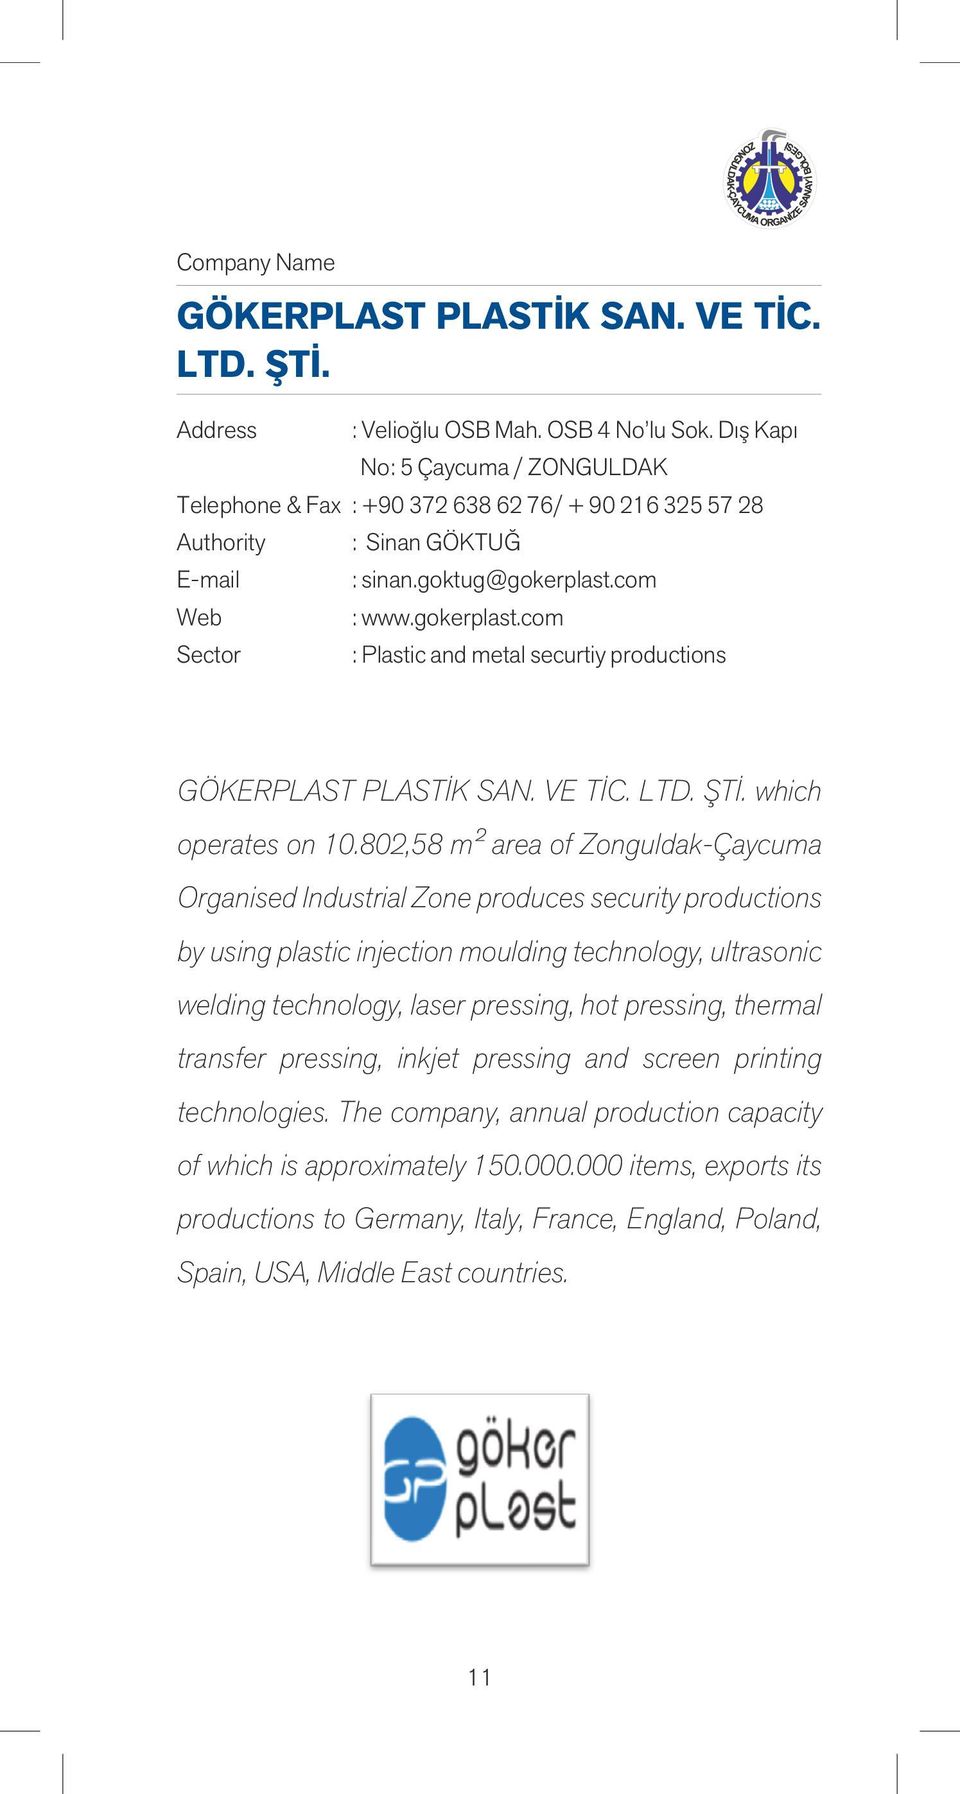 com : www.gokerplast.com : Plastic and metal securtiy productions GÖKERPLAST PLASTİK SAN. VE TİC. LTD. ŞTİ. which operates on 10.